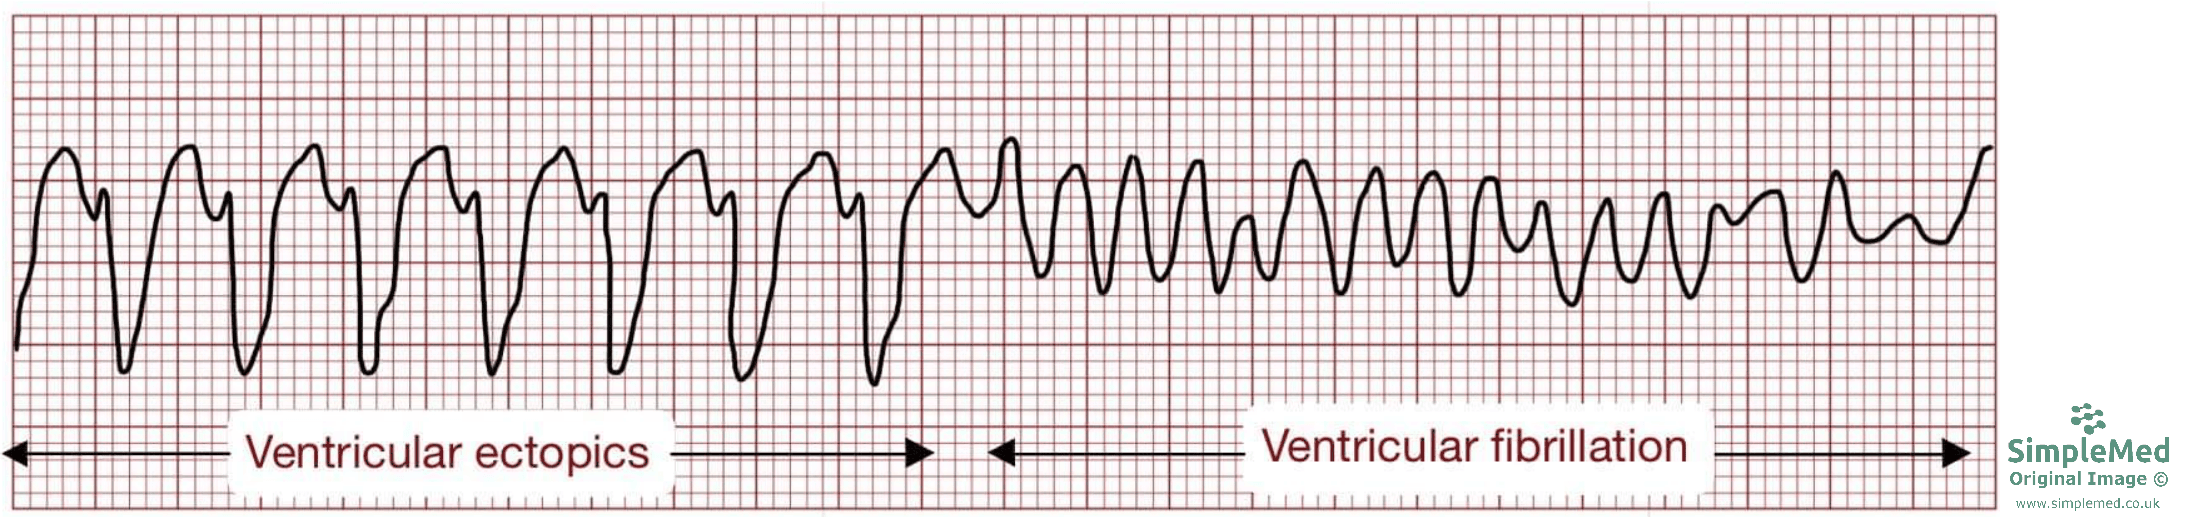 Ventricular Tachycardia ECG SimpleMed